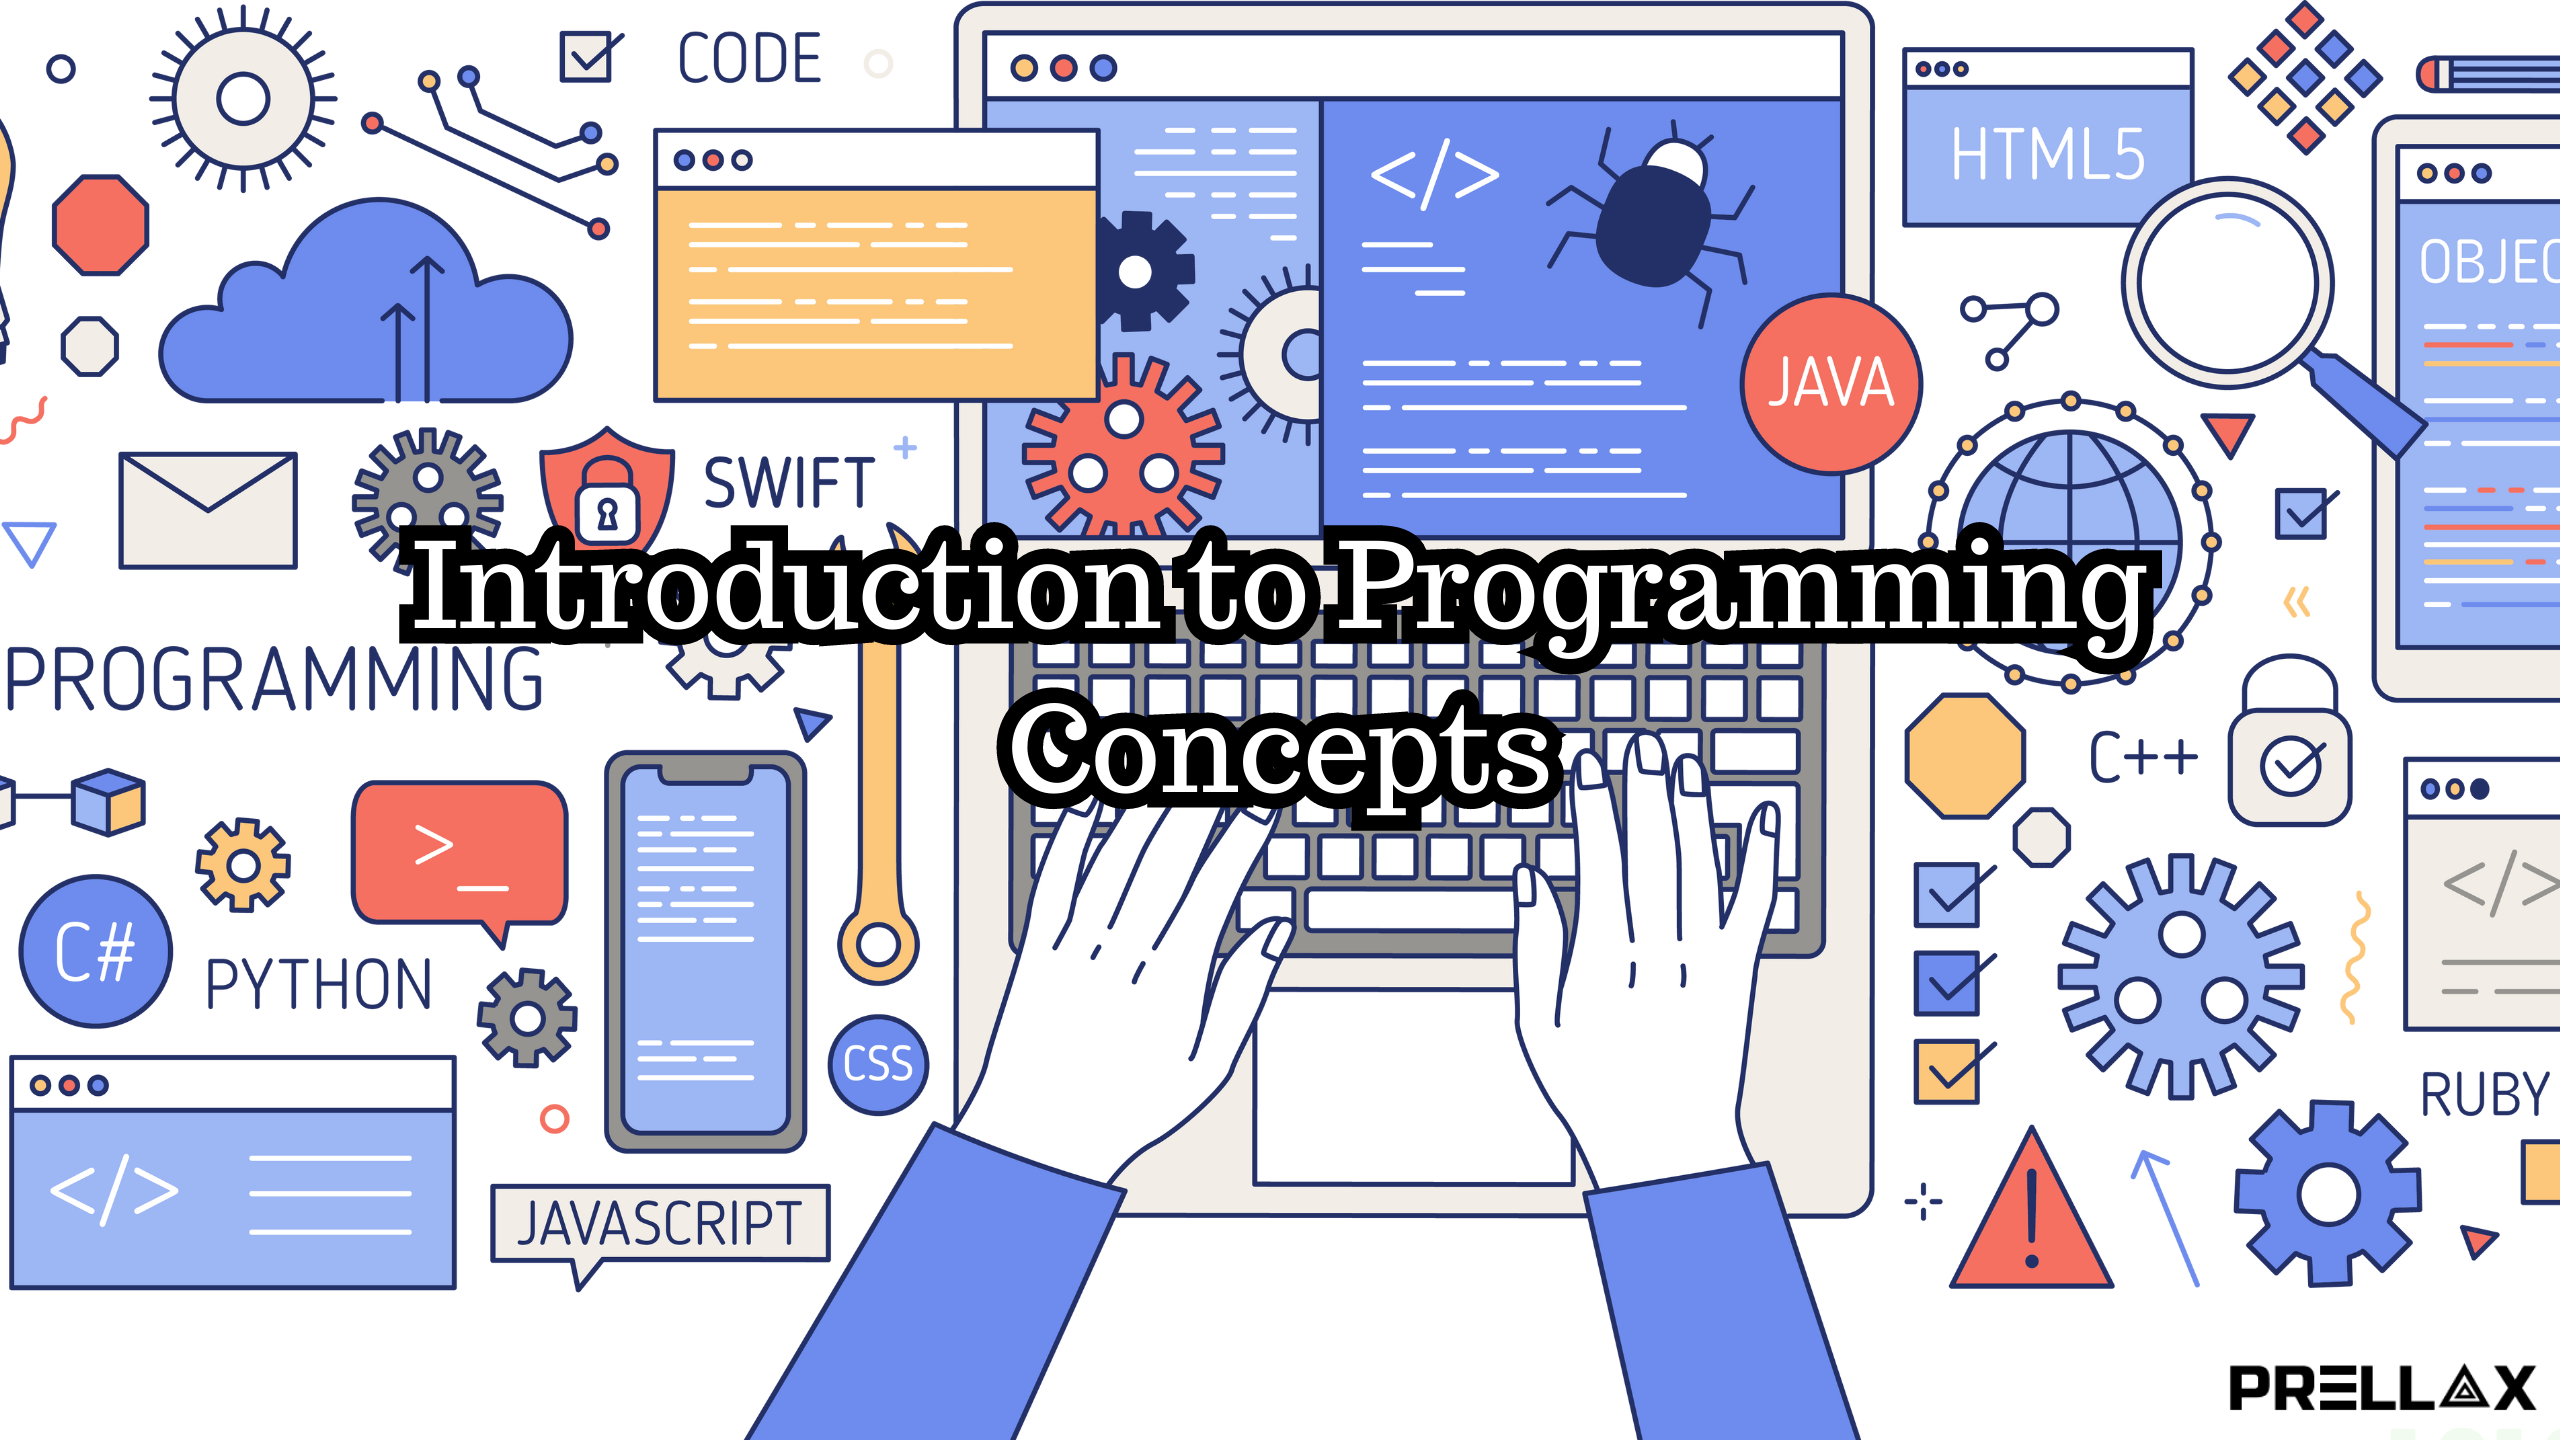 programming concepts